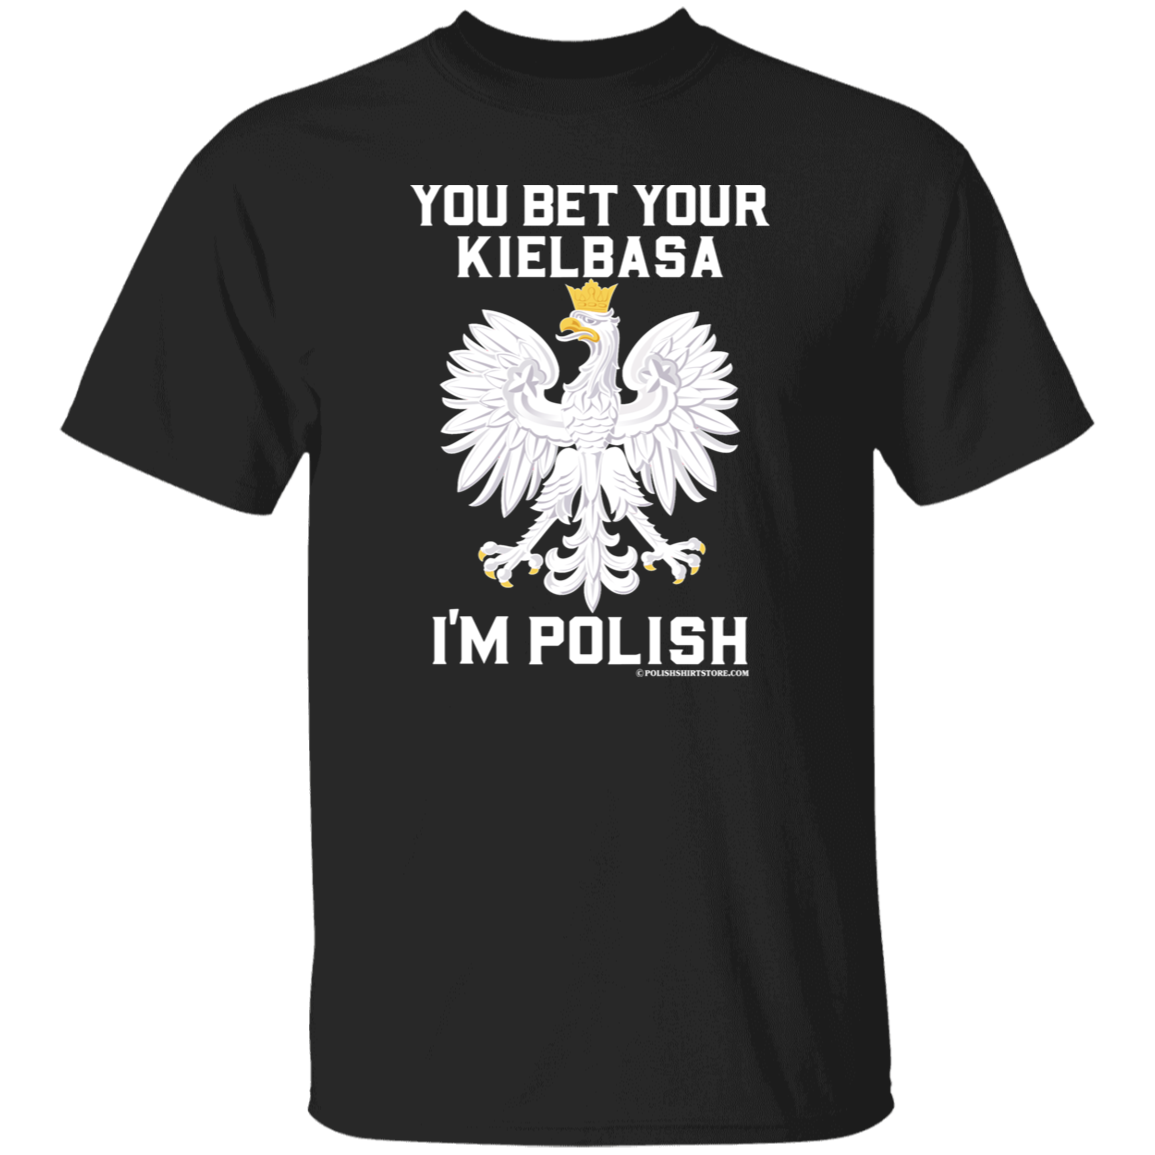 You Bet Your Kielbasa I'm Polish Apparel CustomCat G500 5.3 oz. T-Shirt Black S